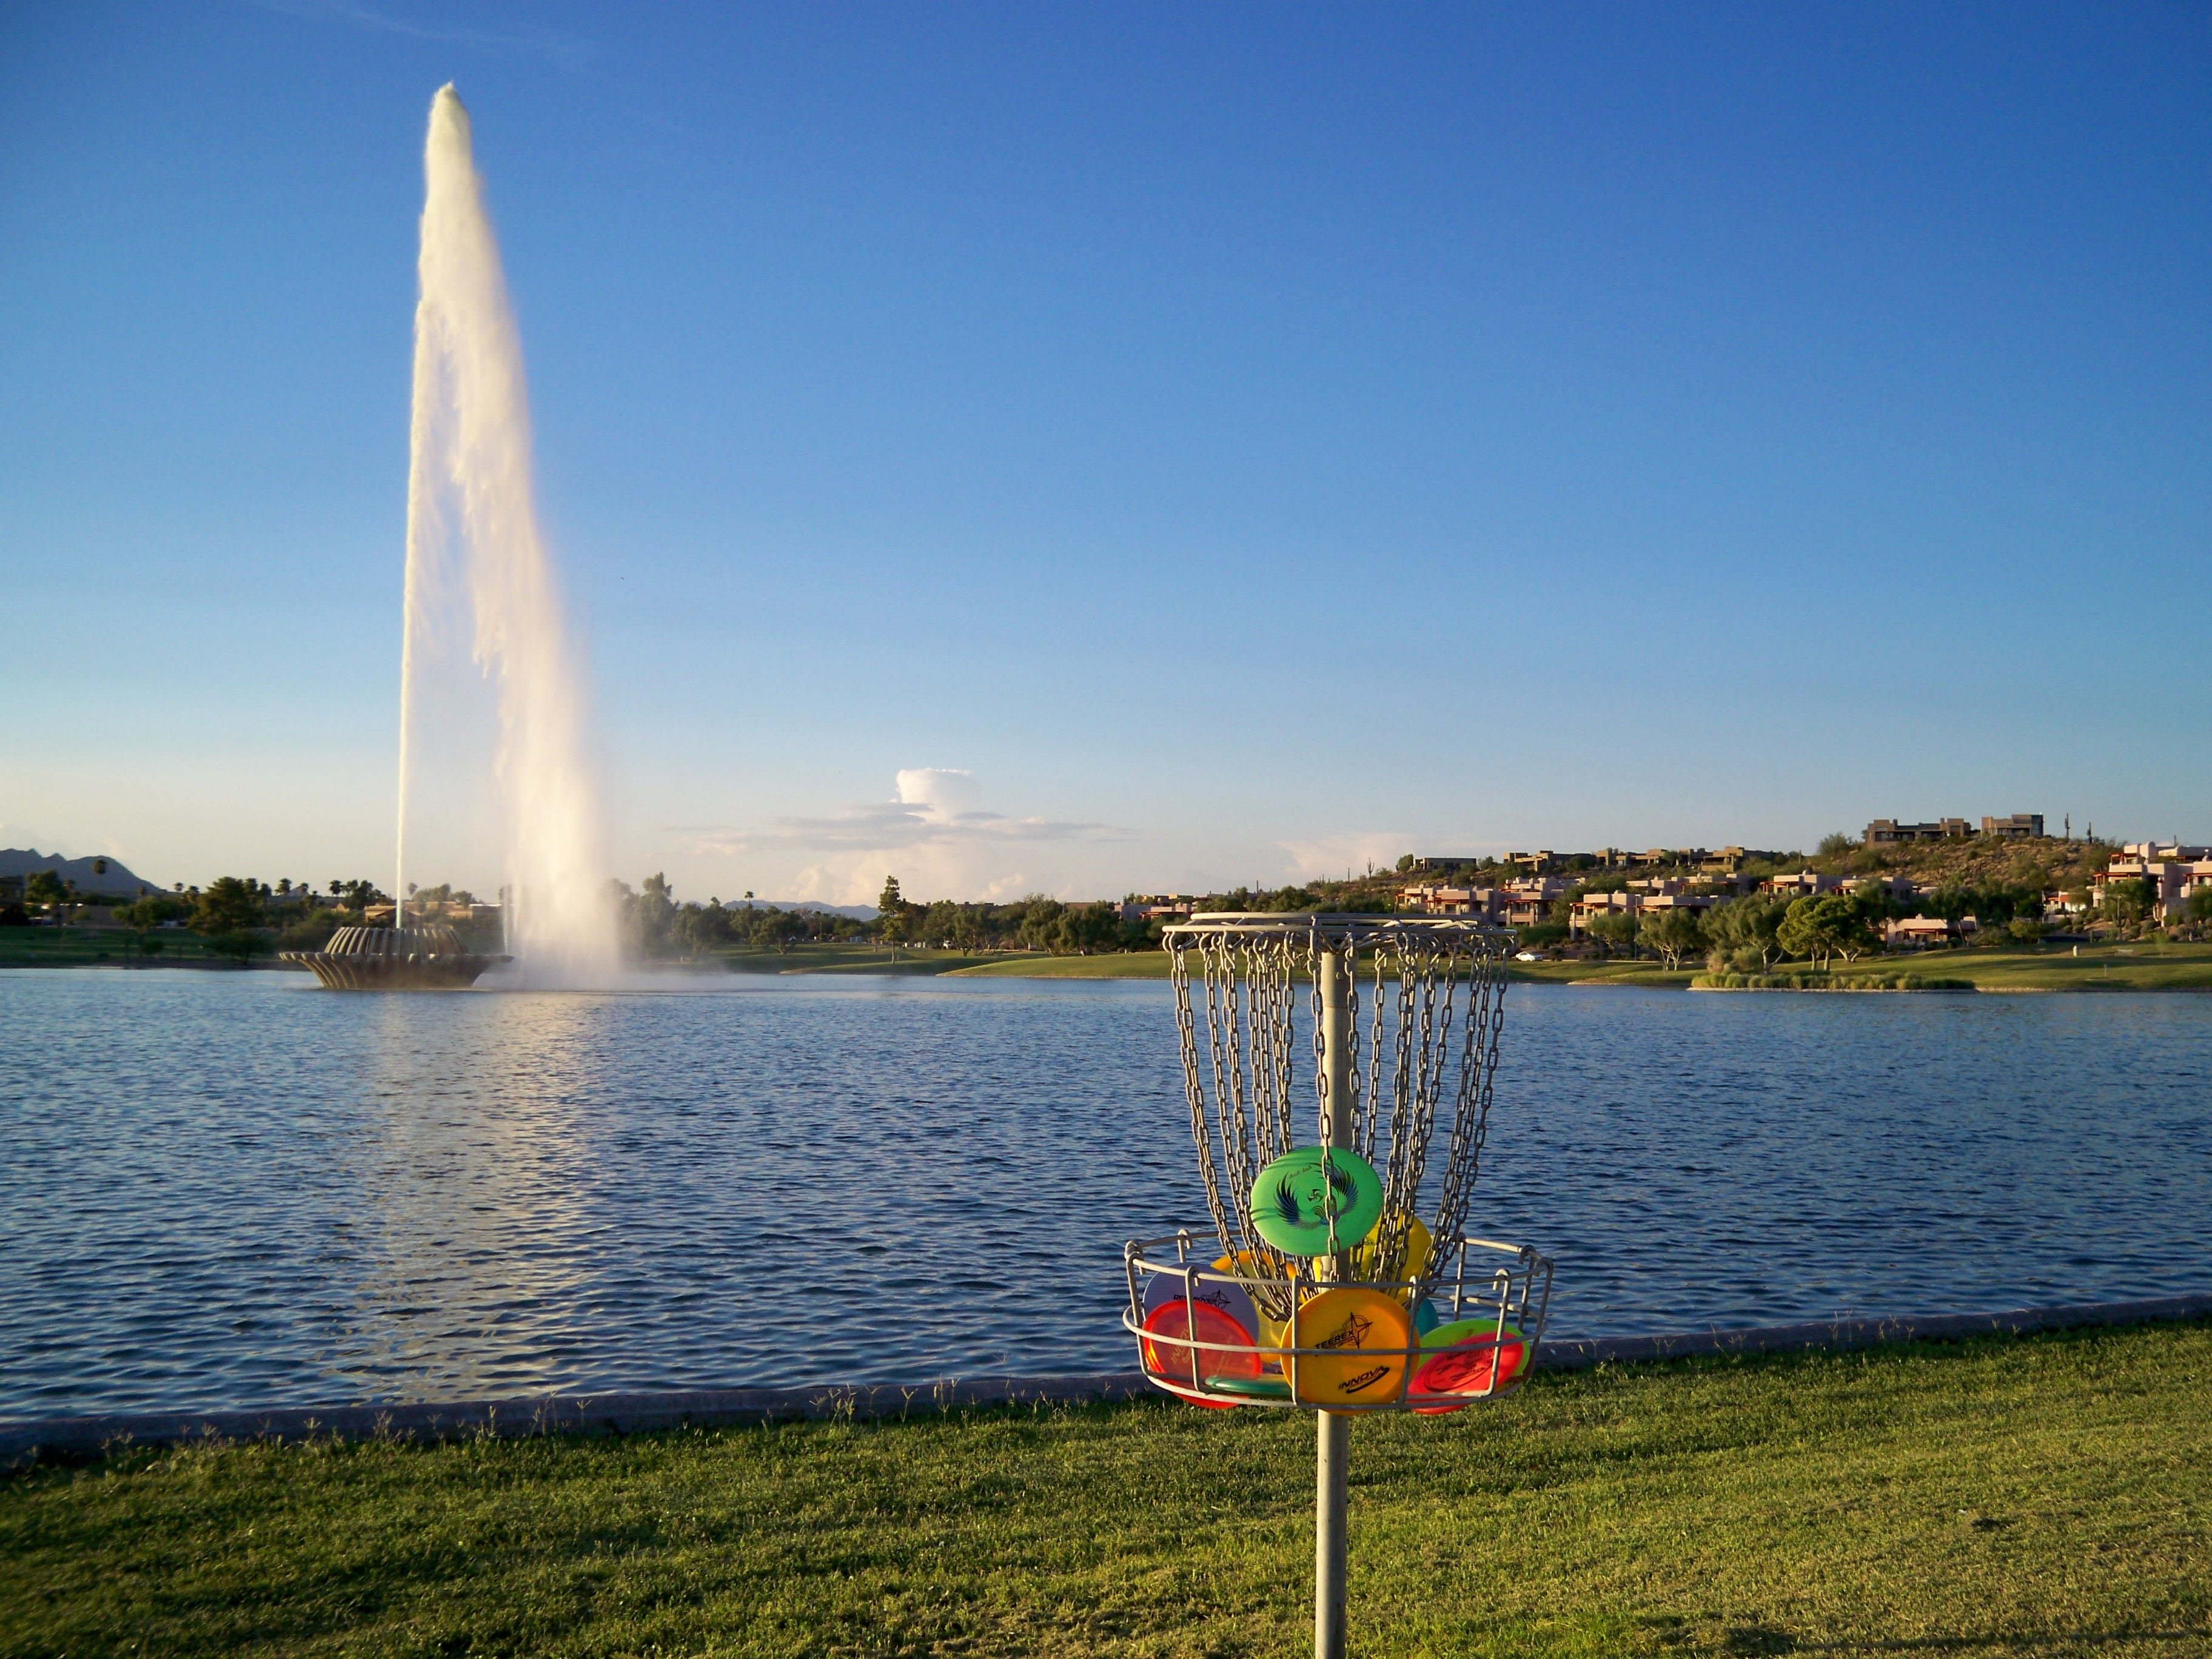 Fountain Hills Disc Golf Course